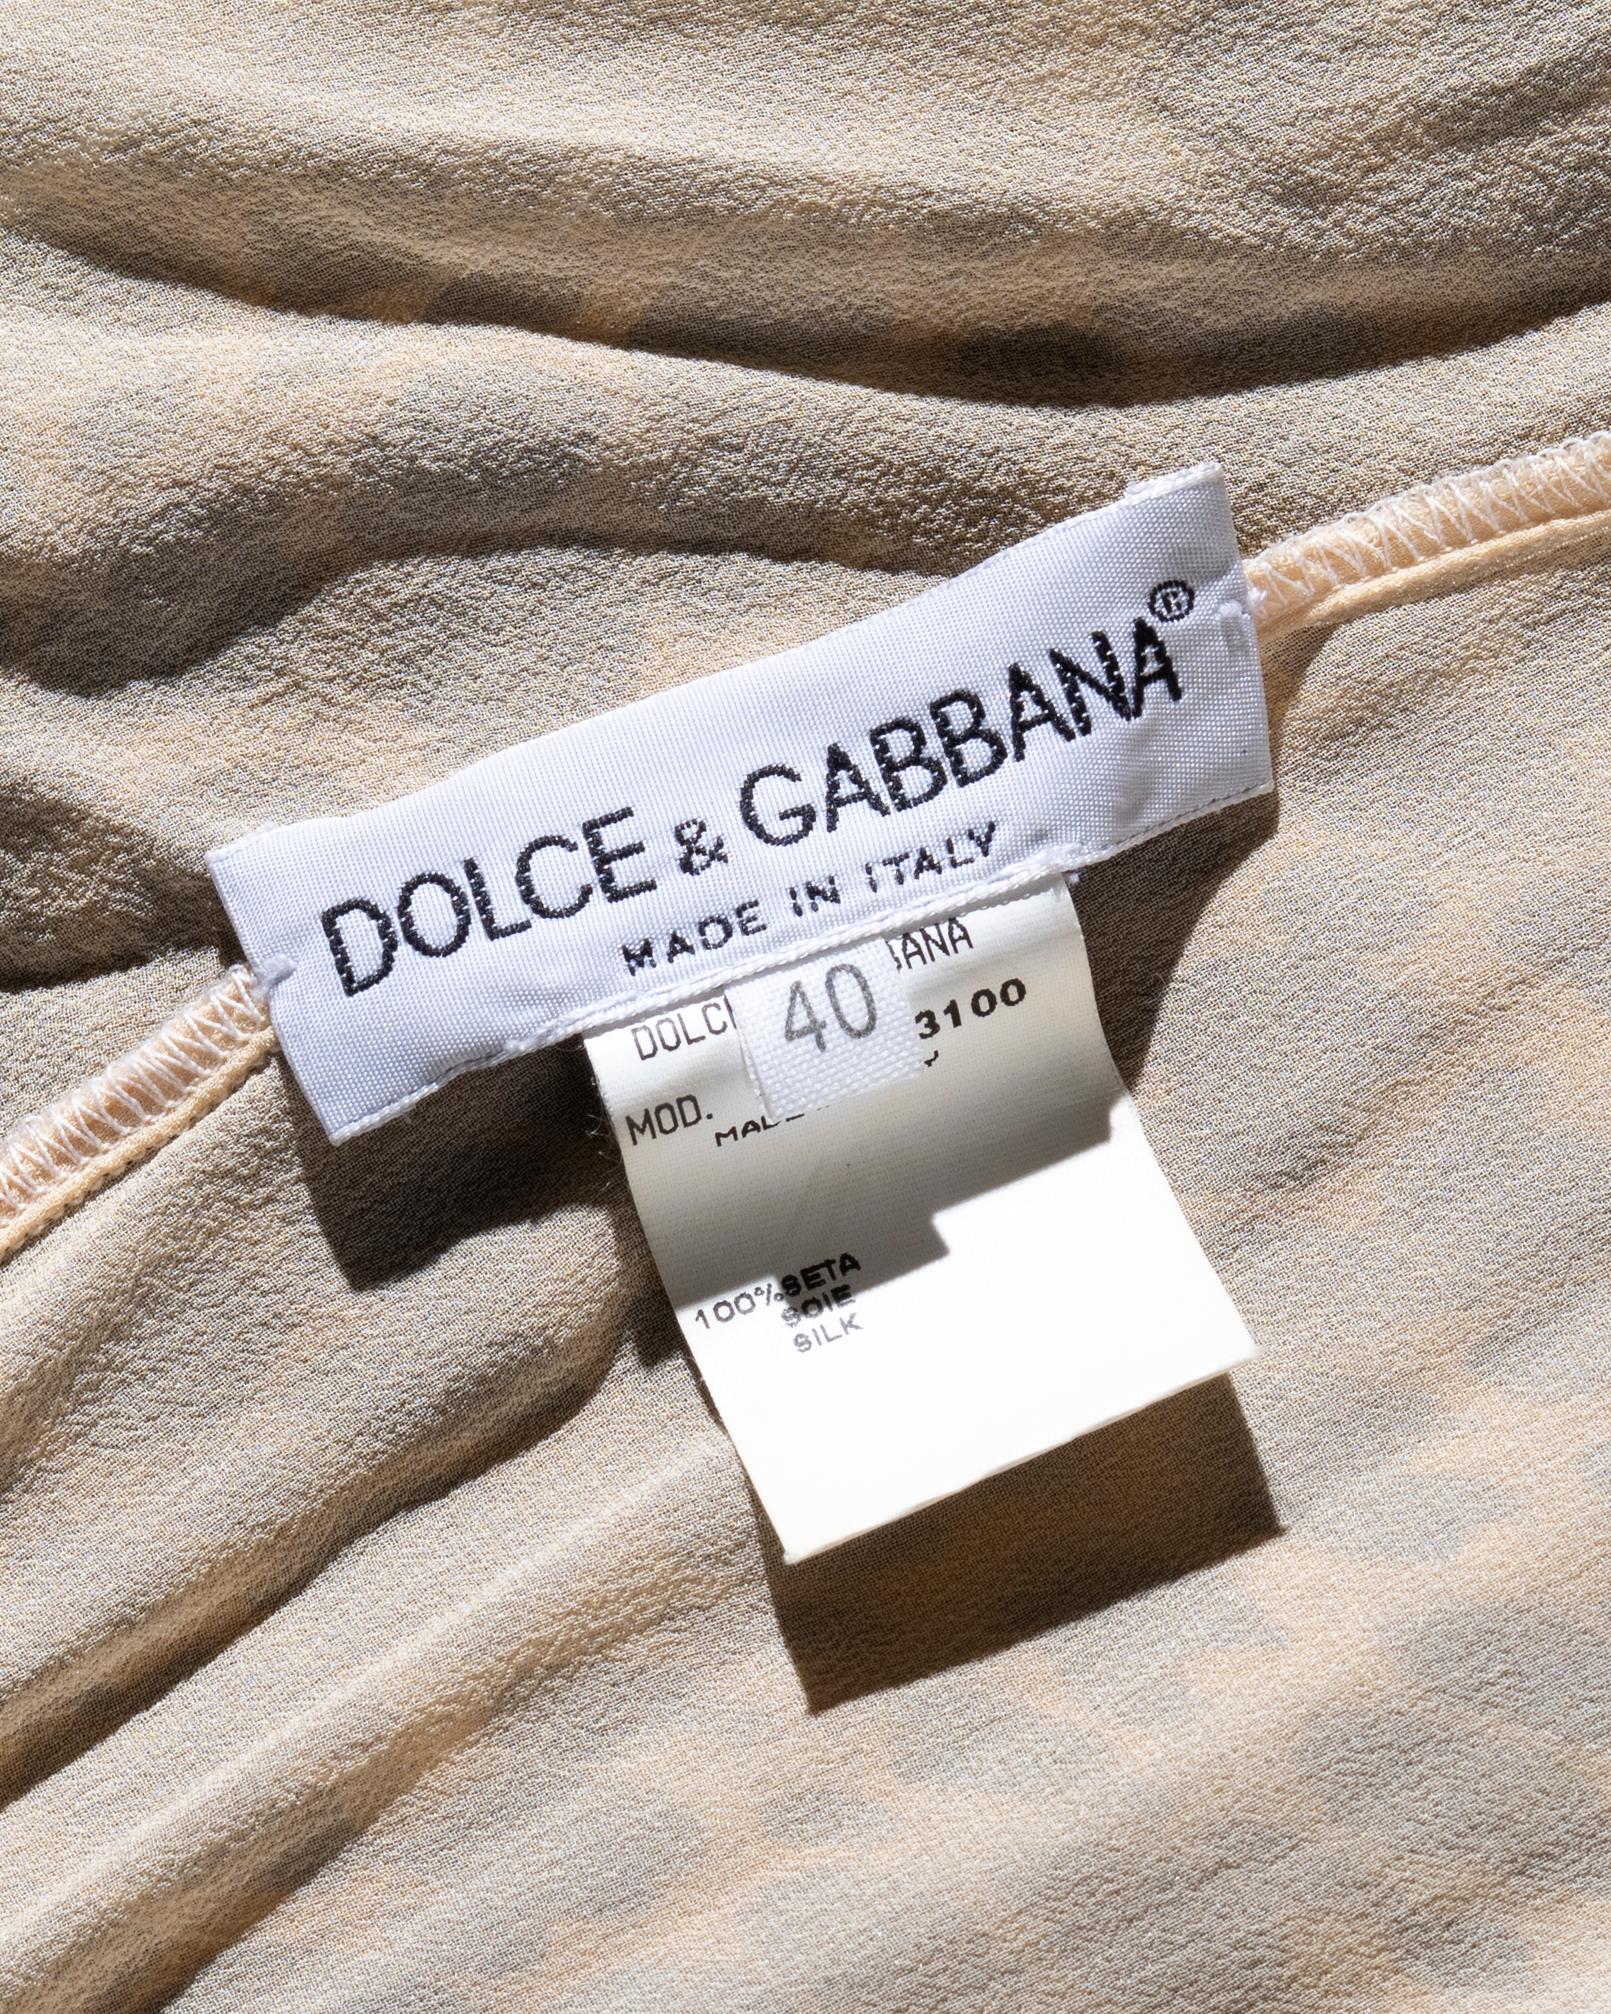 Dolce & Gabbana silk chiffon cheetah print evening slip dress, fw 1996 6